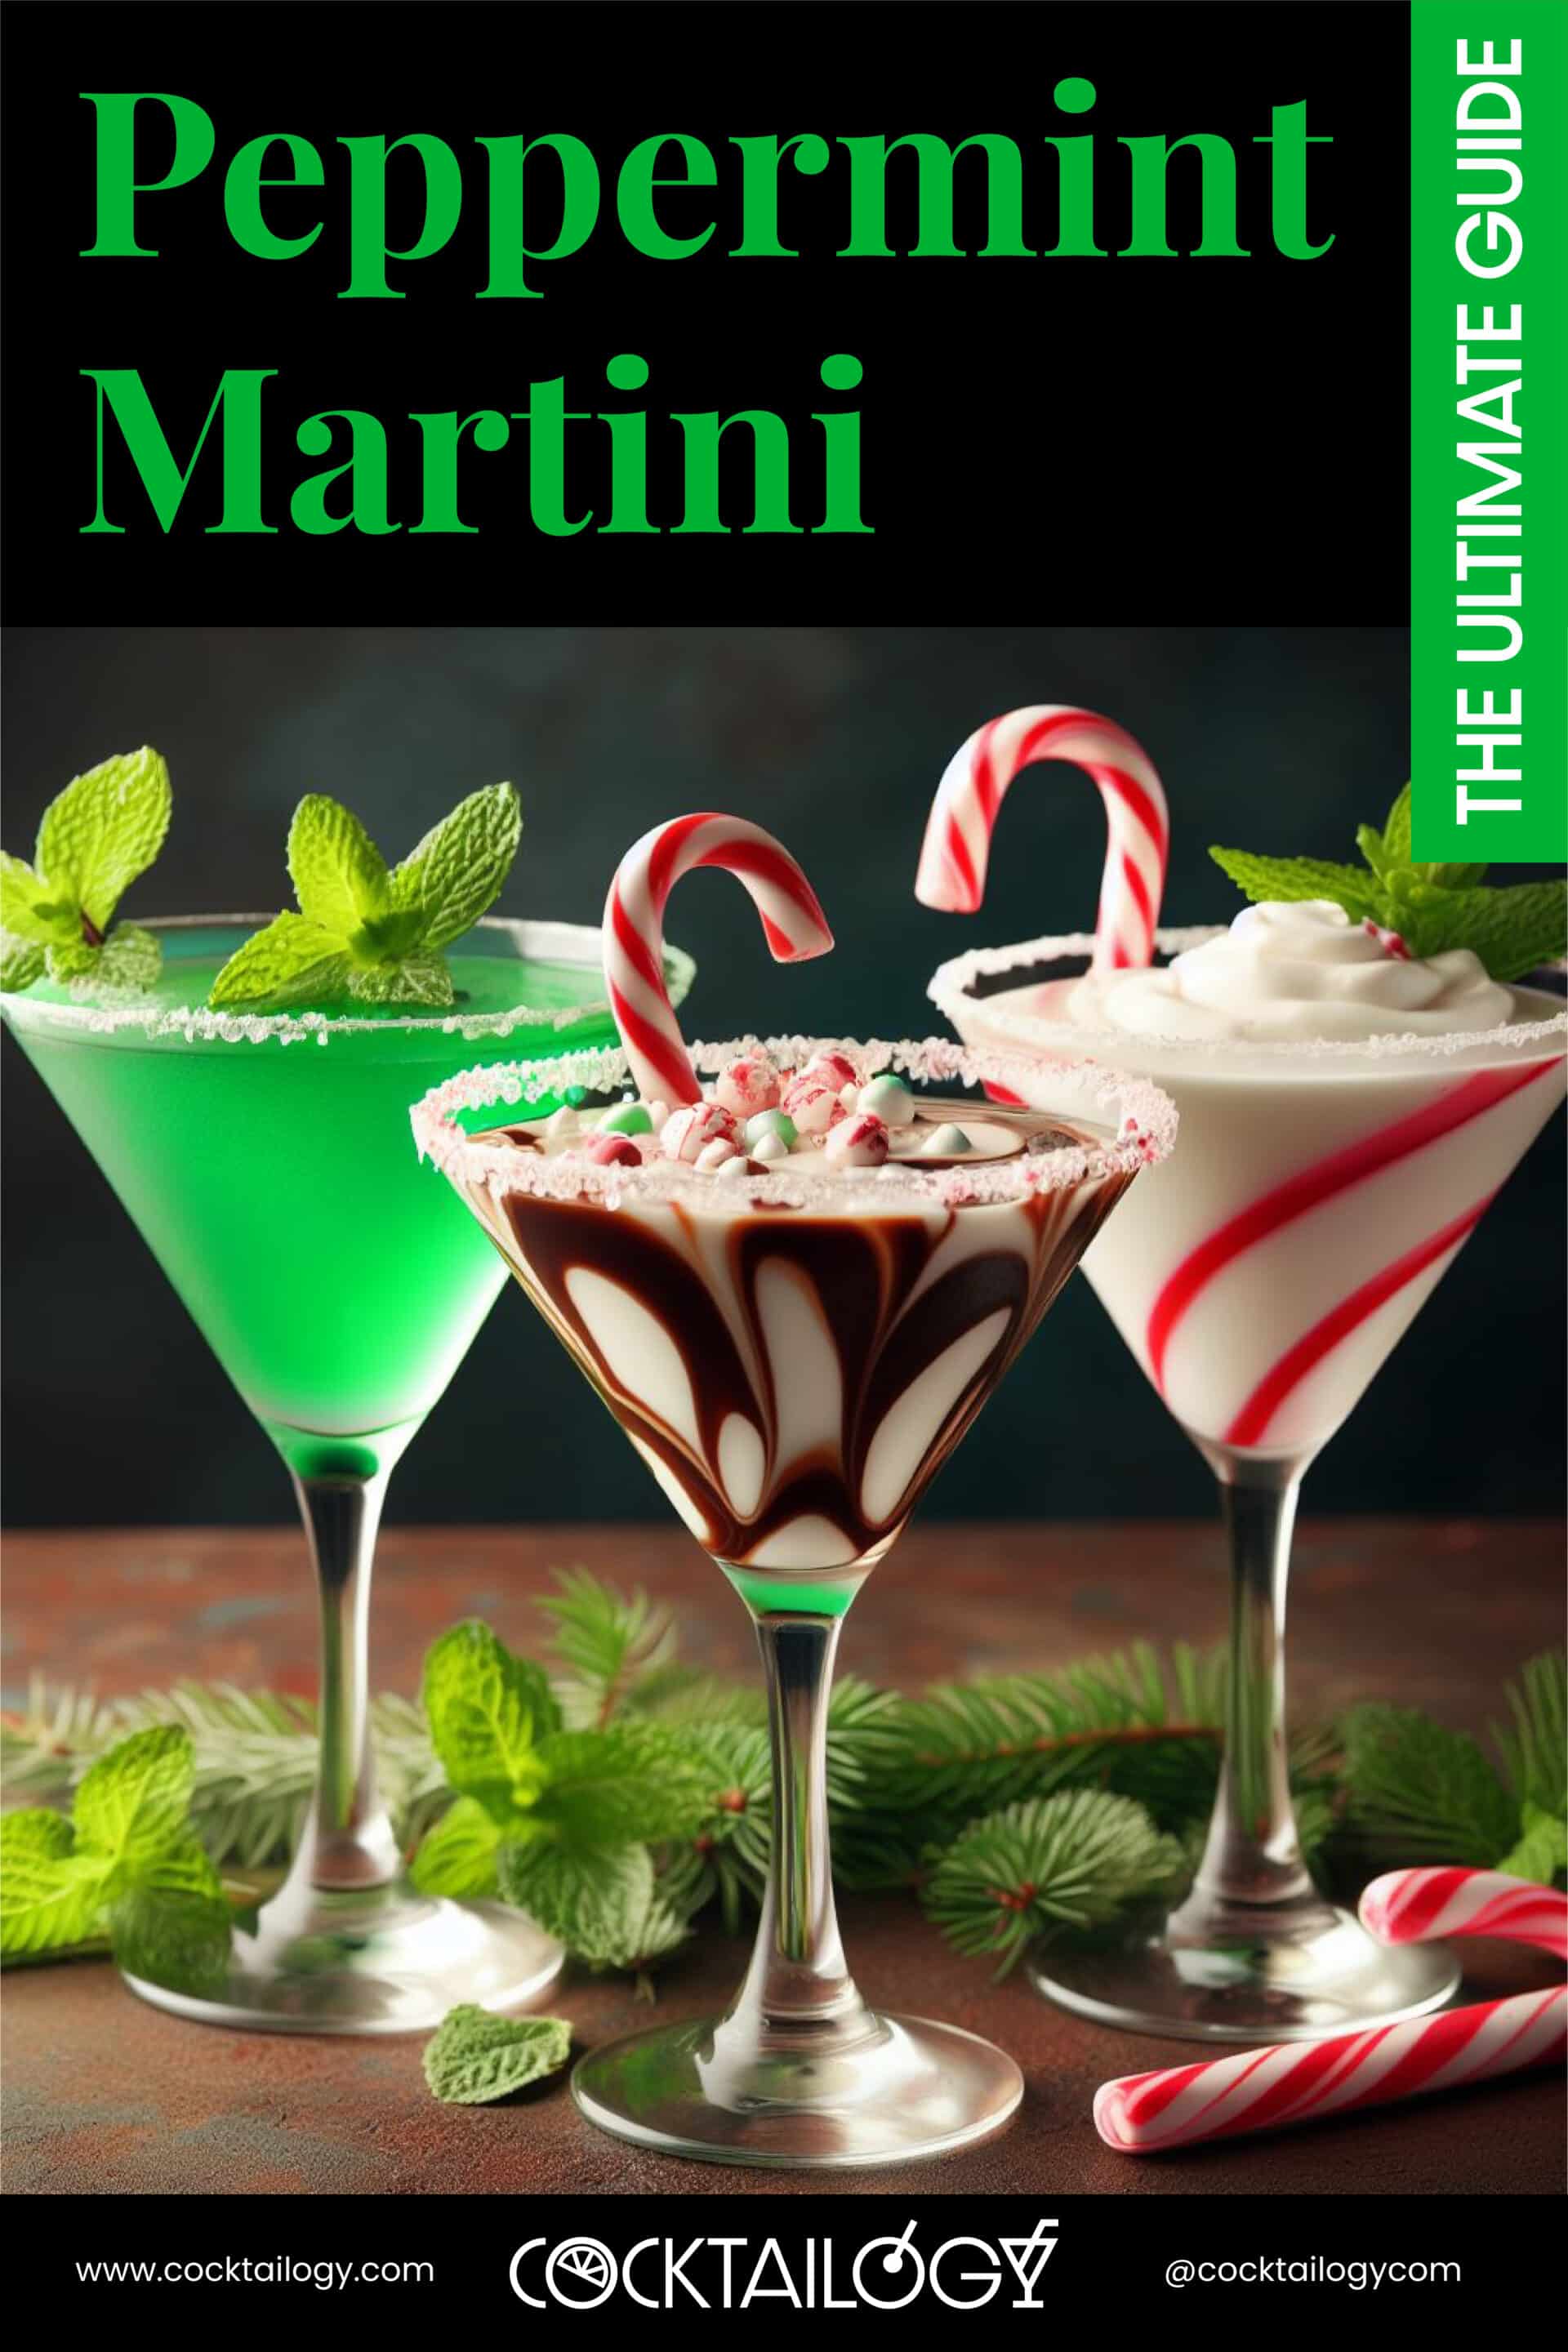 Peppermint Martini Guide